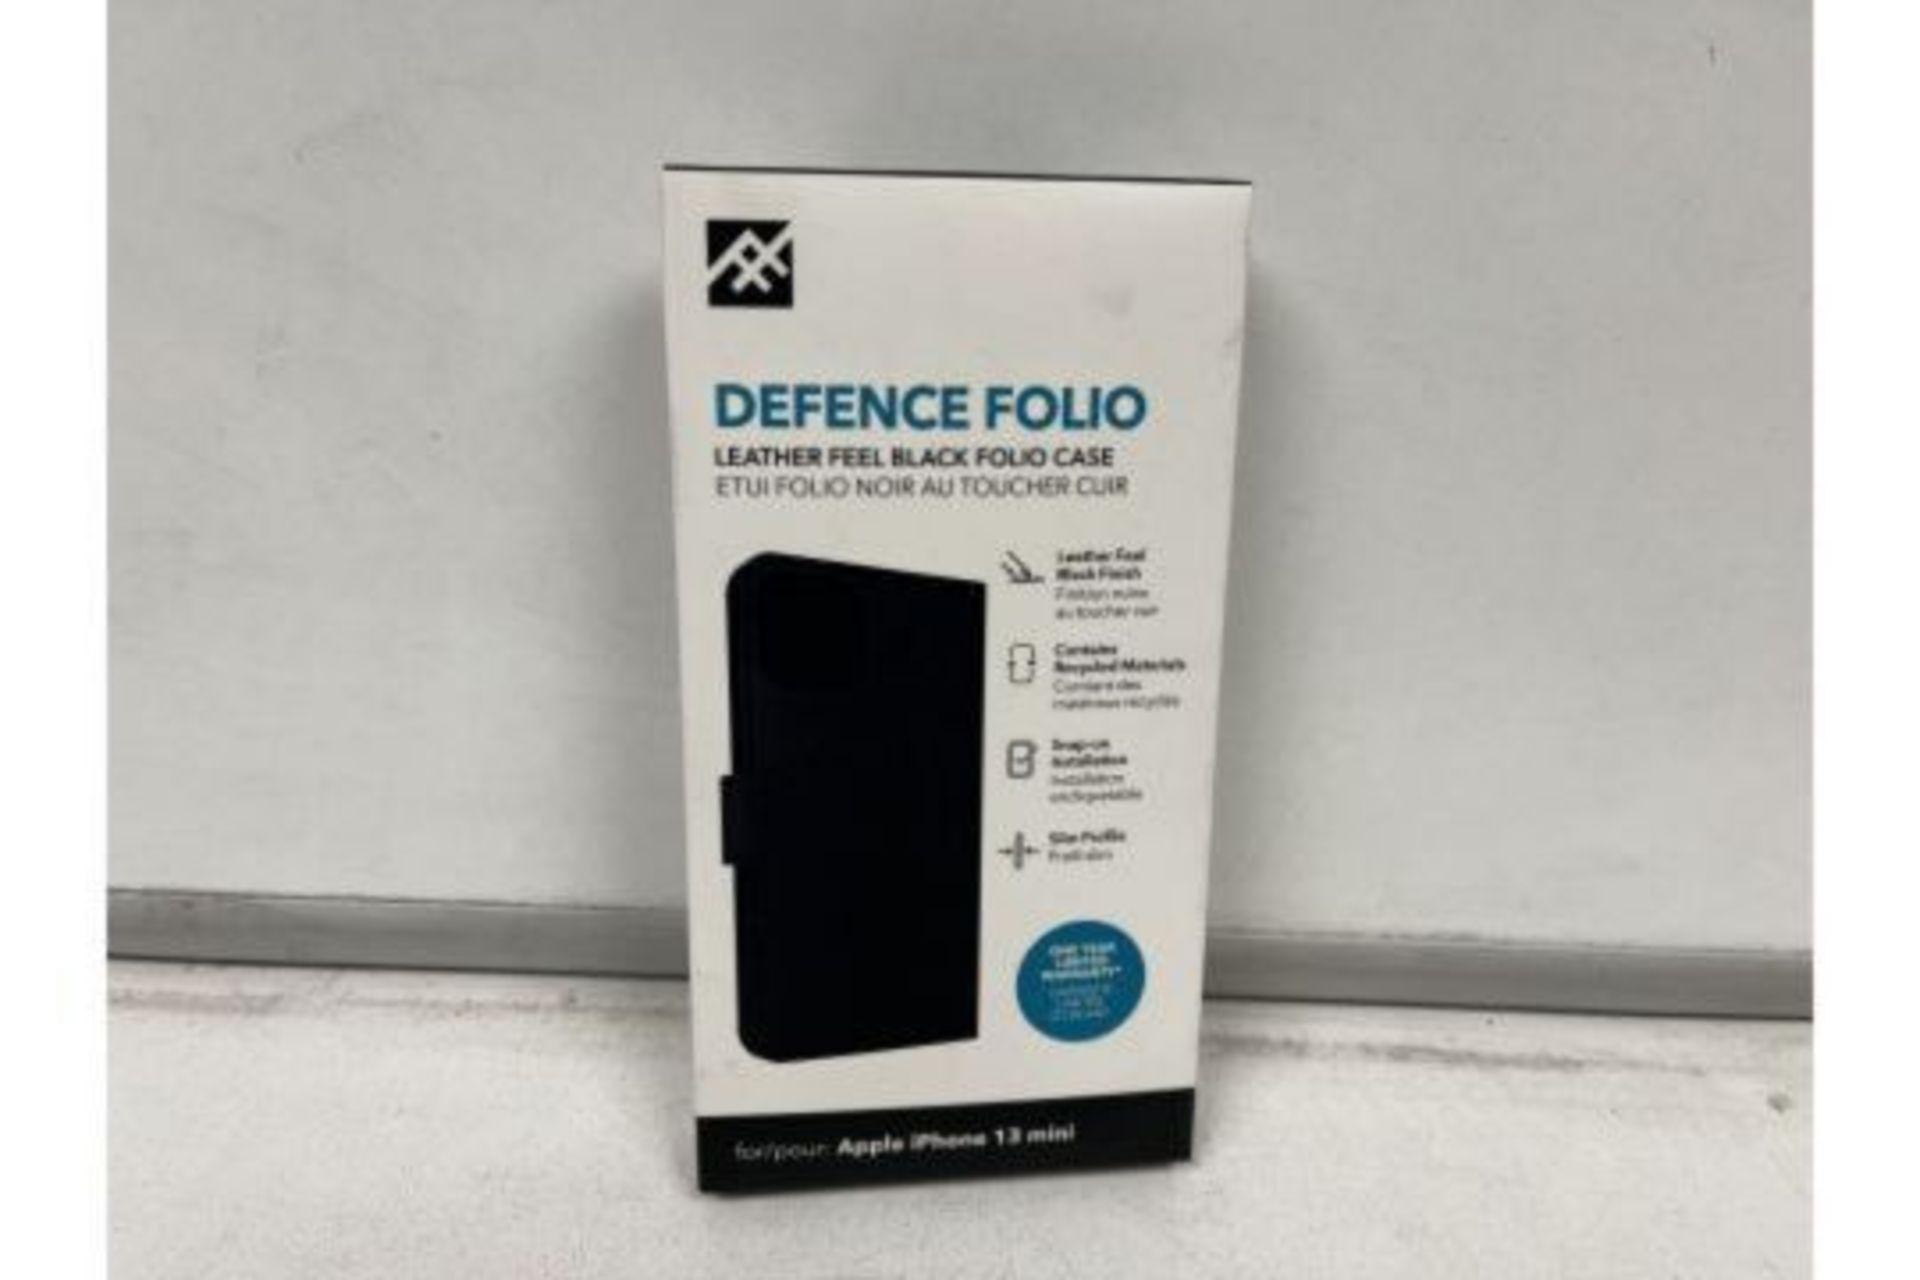 48 X NEW BOXED DEFENCE FOLIO LEATHER FEEL BLACK FOLIO CASES FOR APPLE iPHONE 13 MINI. ROW16RACK